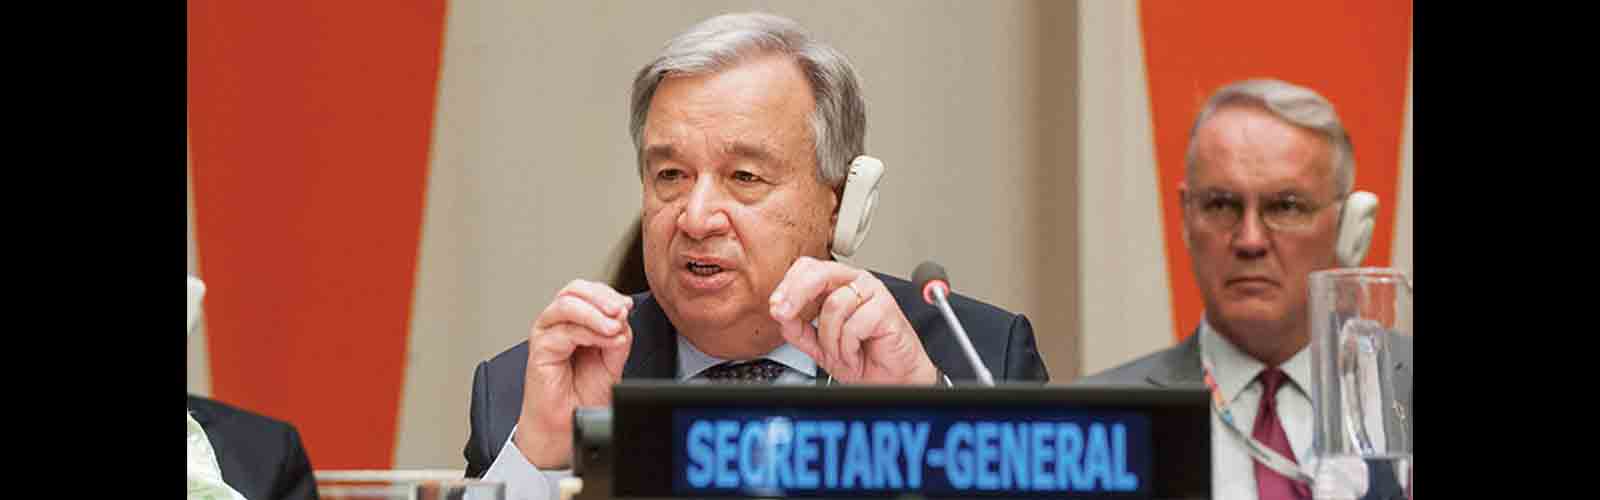 UN Super Bureaucrats Cause Stir at UN Headquarters - C-Fam